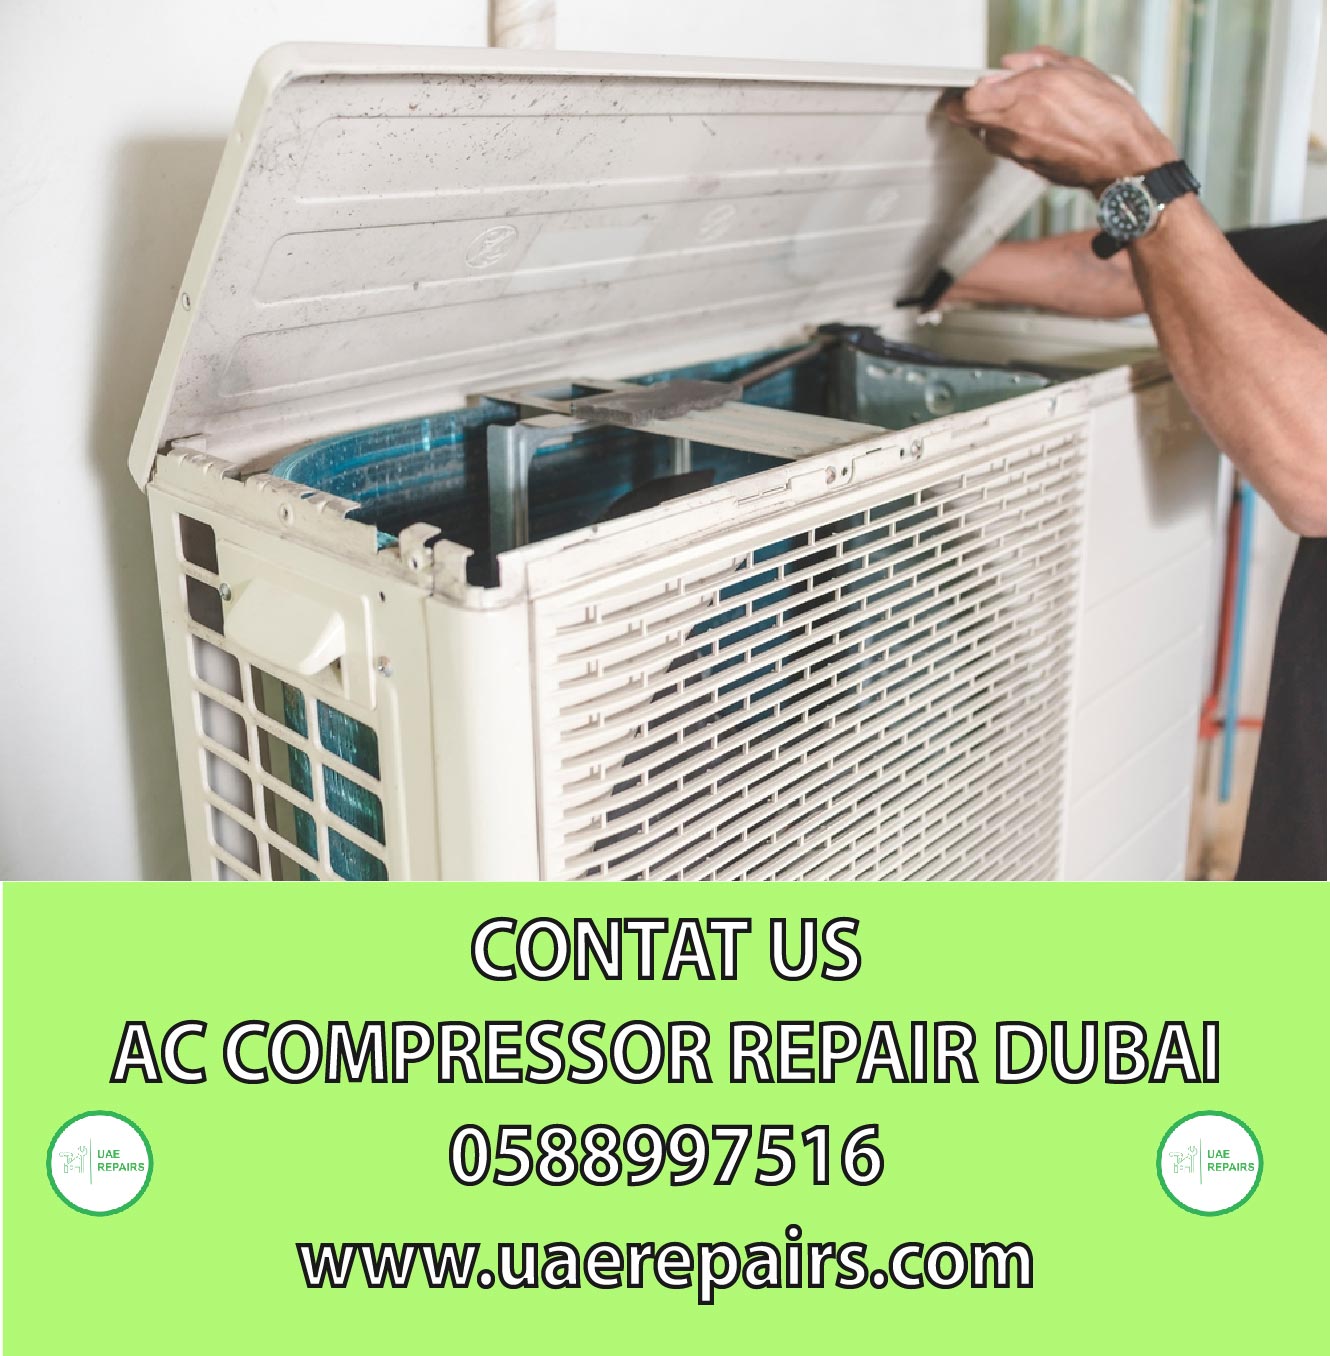 CONTACT UAE REPAIRS FOR AC COMPRESSOR REPAIR DUBAI 0588997516